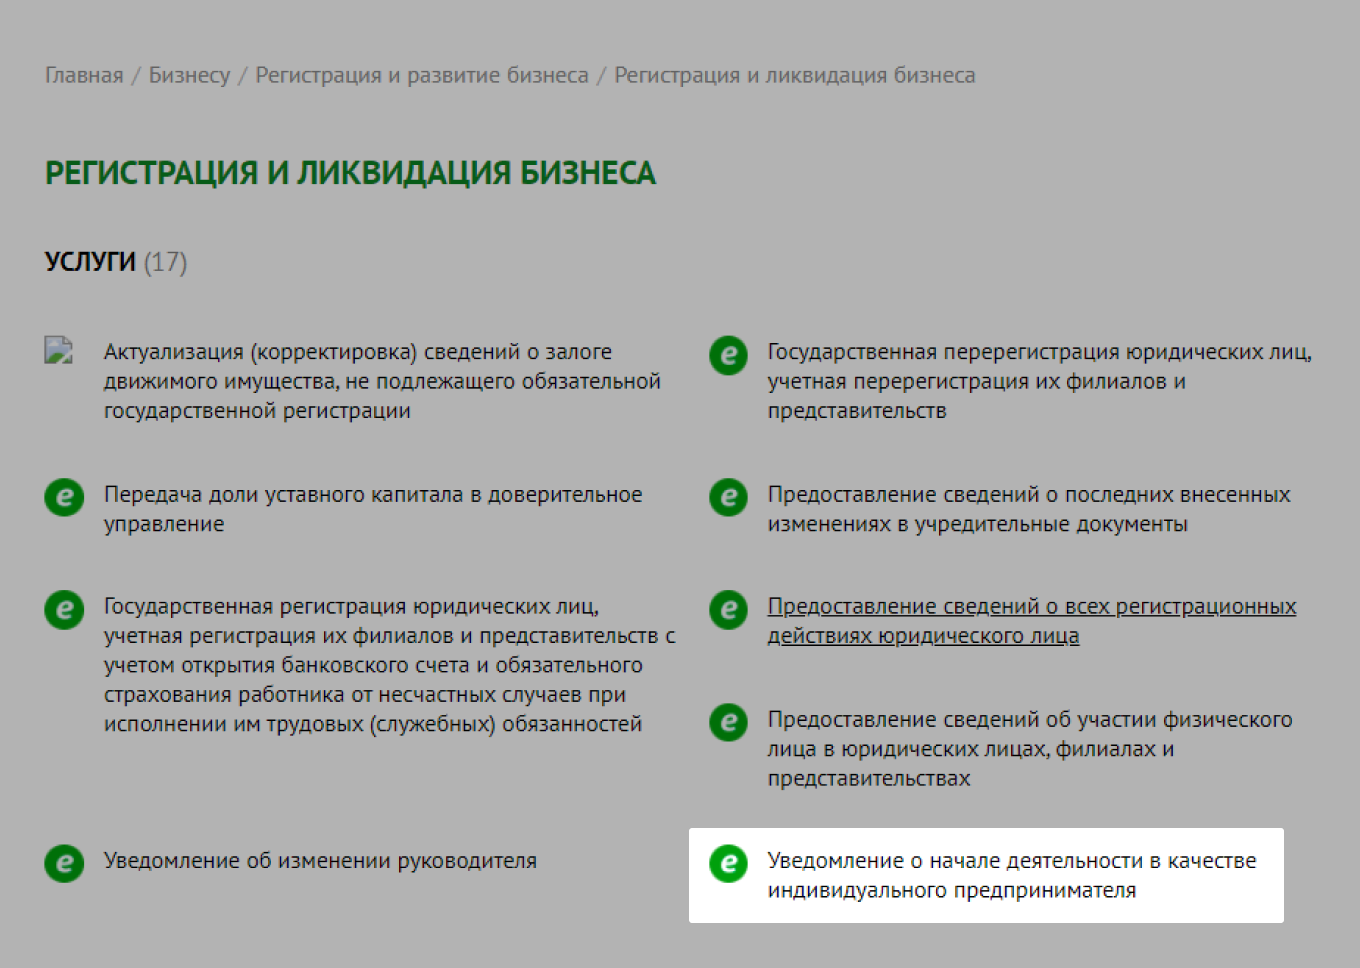 Раздел «Регистрация и ликвидация бизнеса» в egov.kz